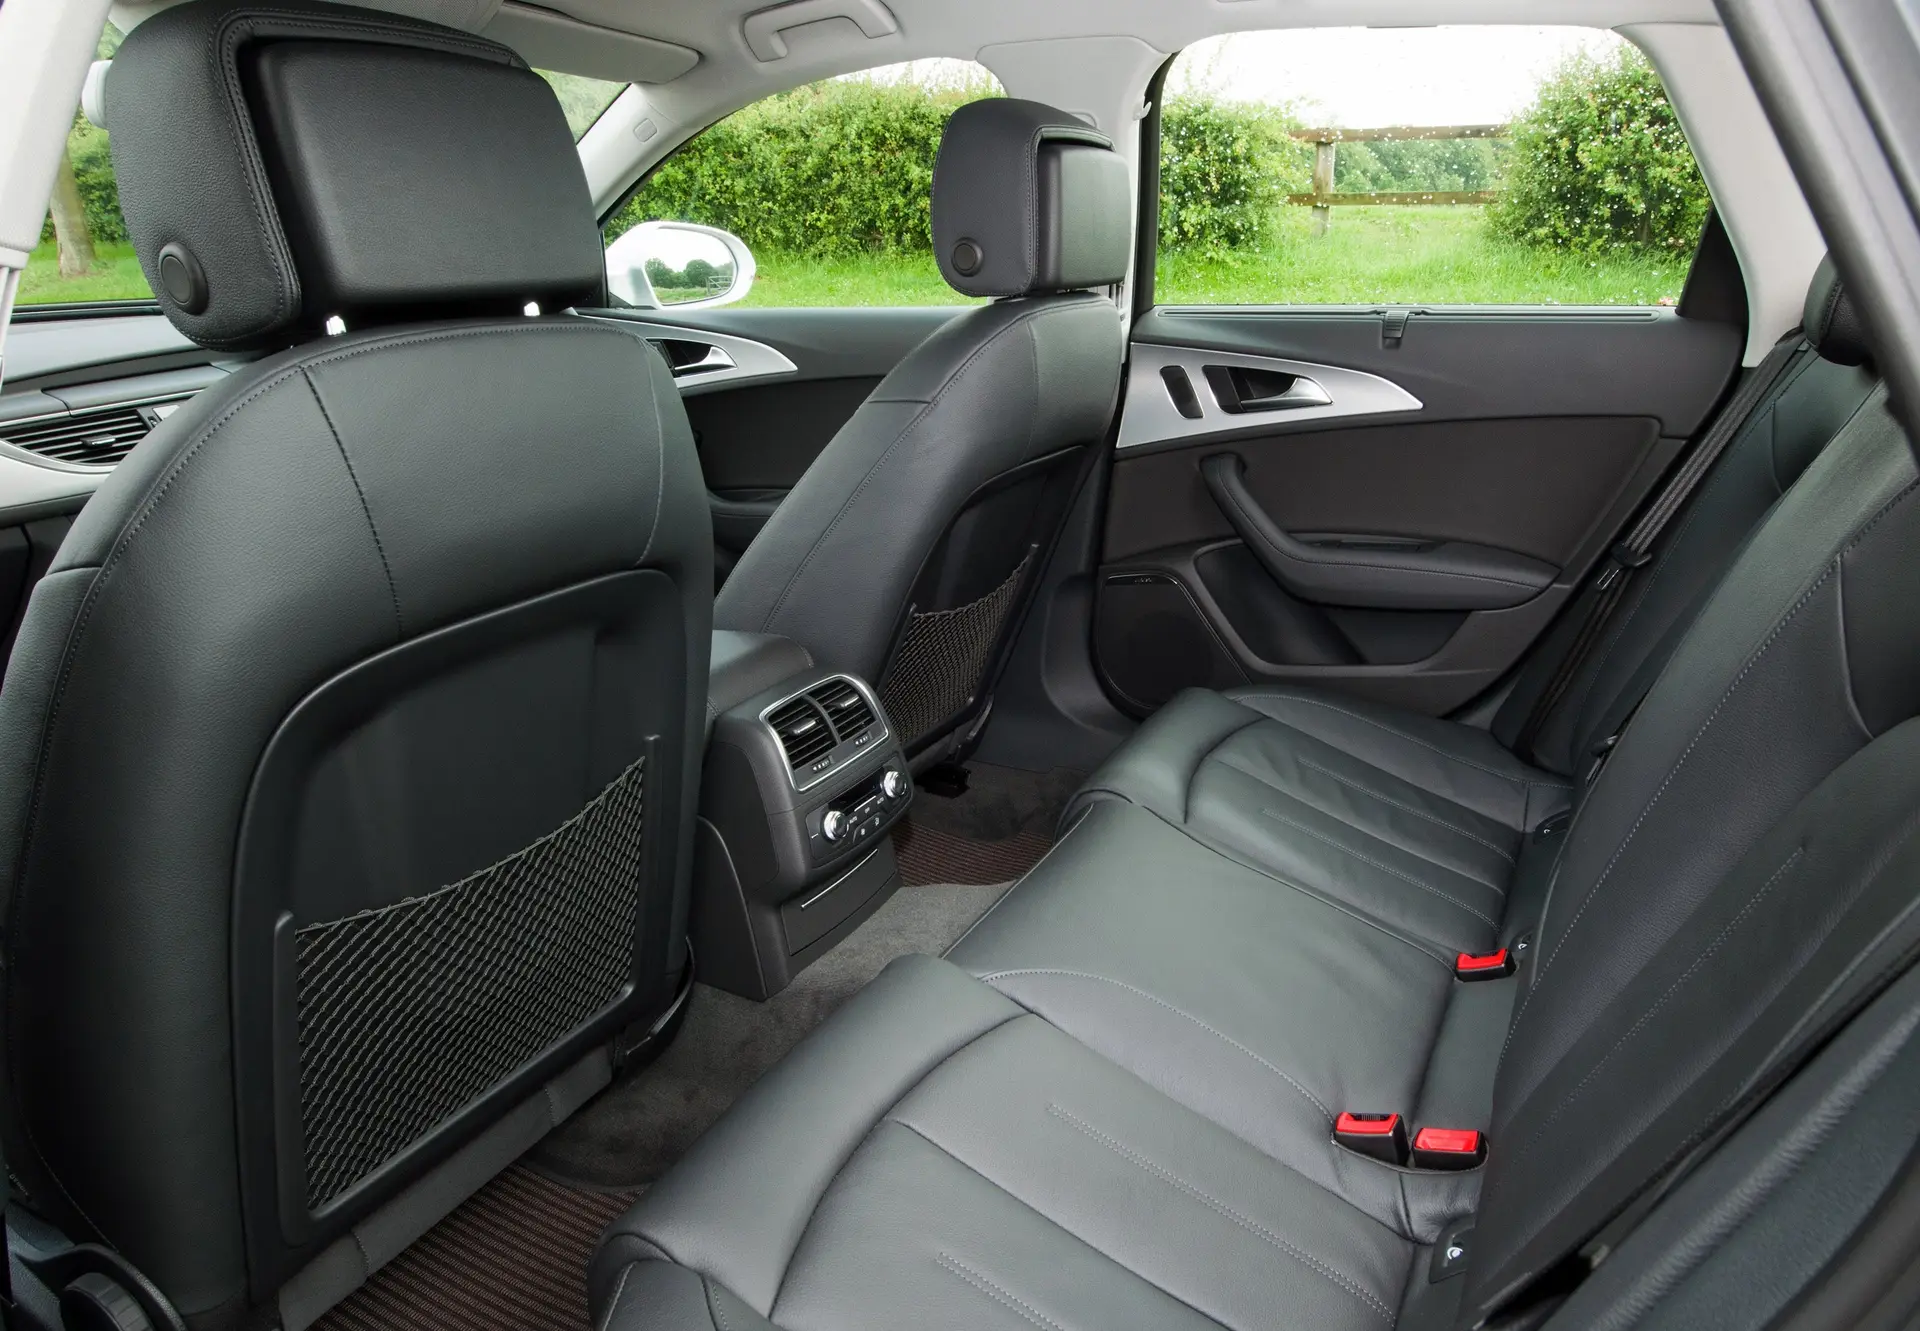 Audi A6 Allroad (2012-2018) Review: Interior close up photo of the Audi A6 Allroad rear seats